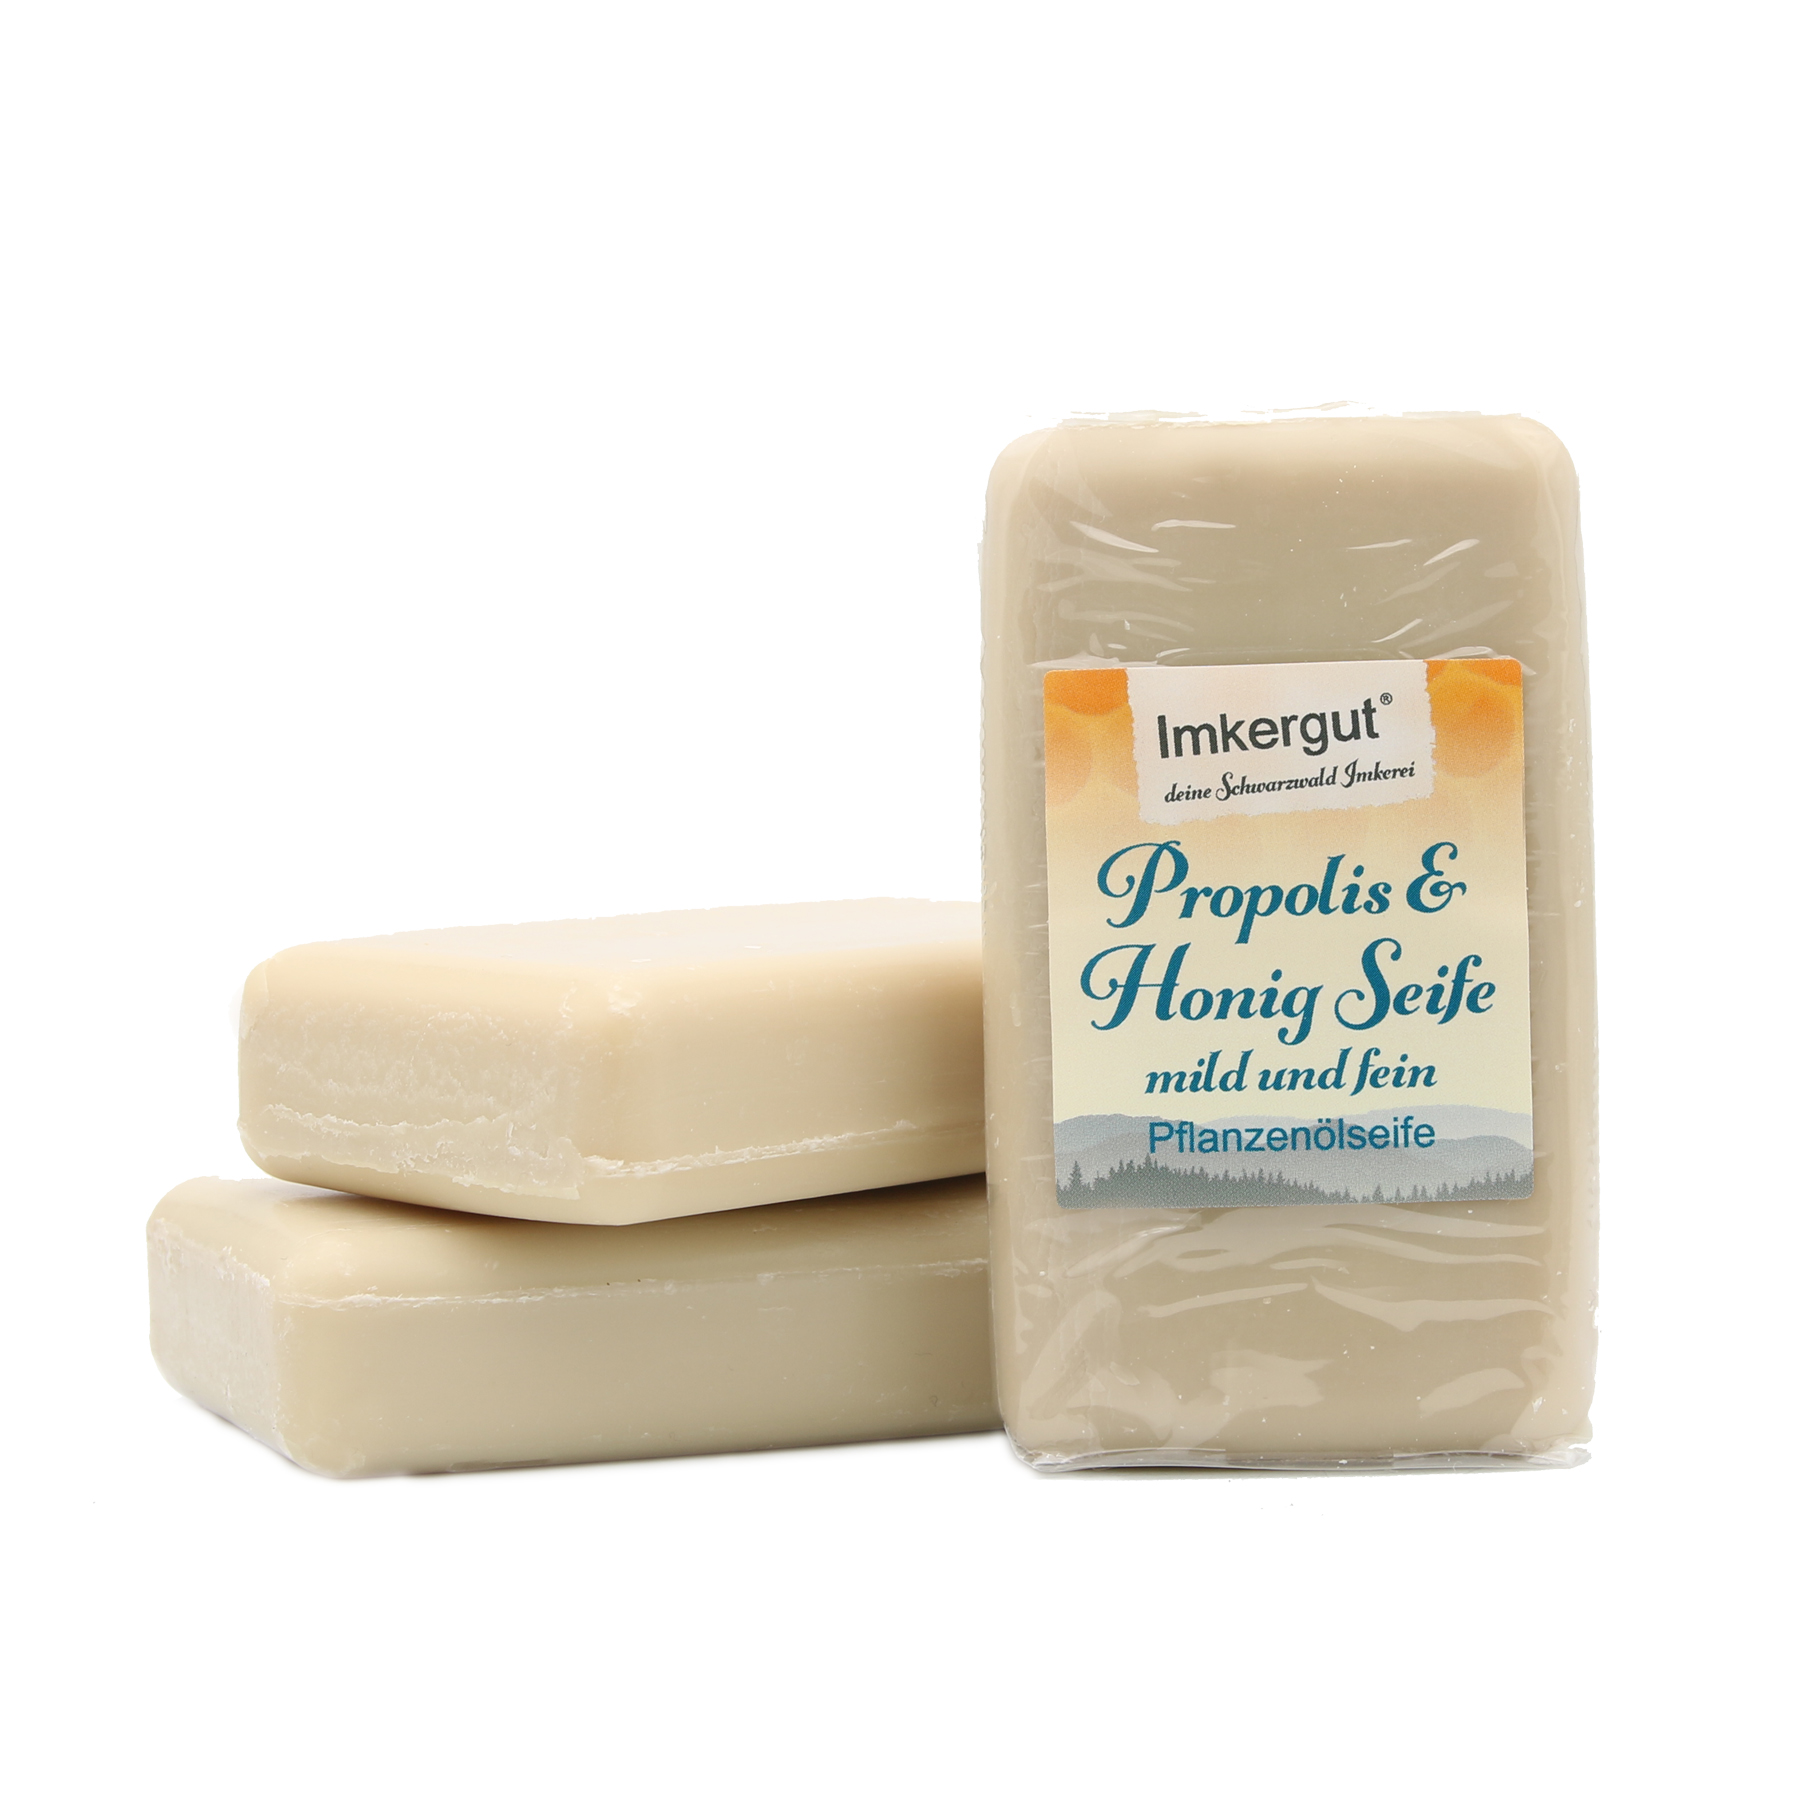 Propolis Honig Seife verpackt mit neuem Etikett vor unverpackter Propolis Honig Seife